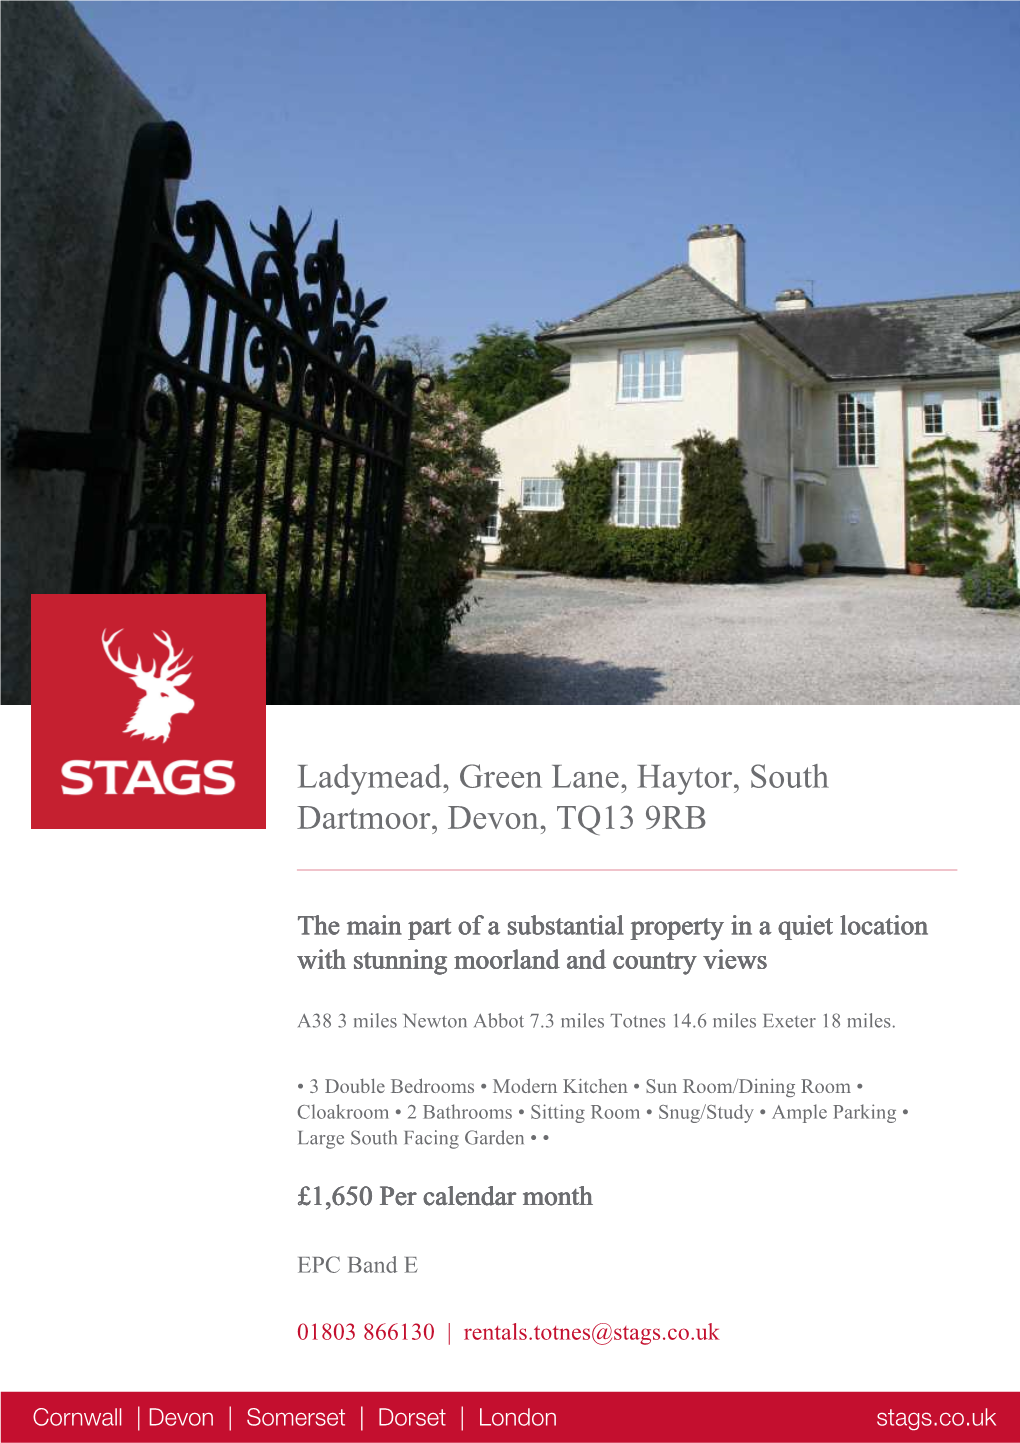 Ladymead, Green Lane, Haytor, South Dartmoor, Devon, TQ13 9RB